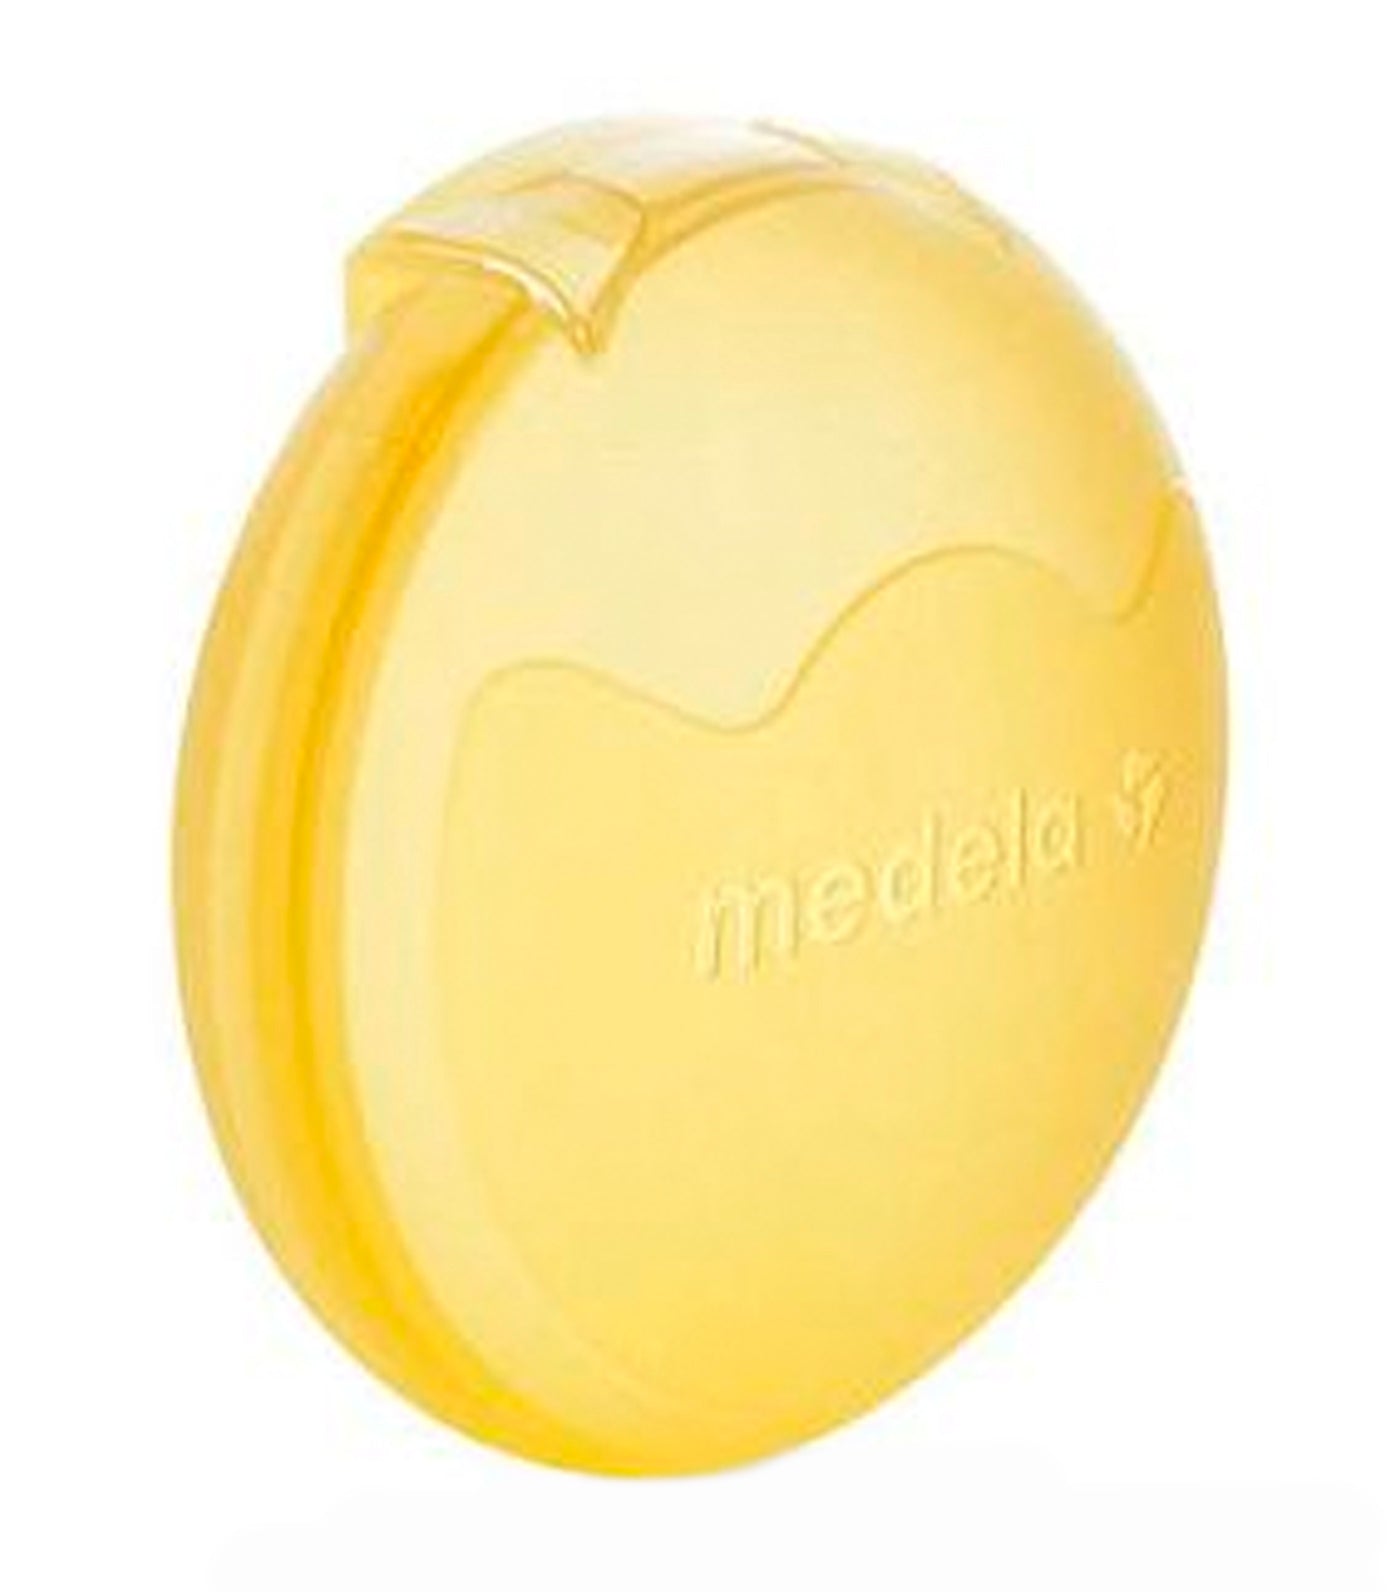 Medela Contact Nipple Shields – Ladies in Waiting